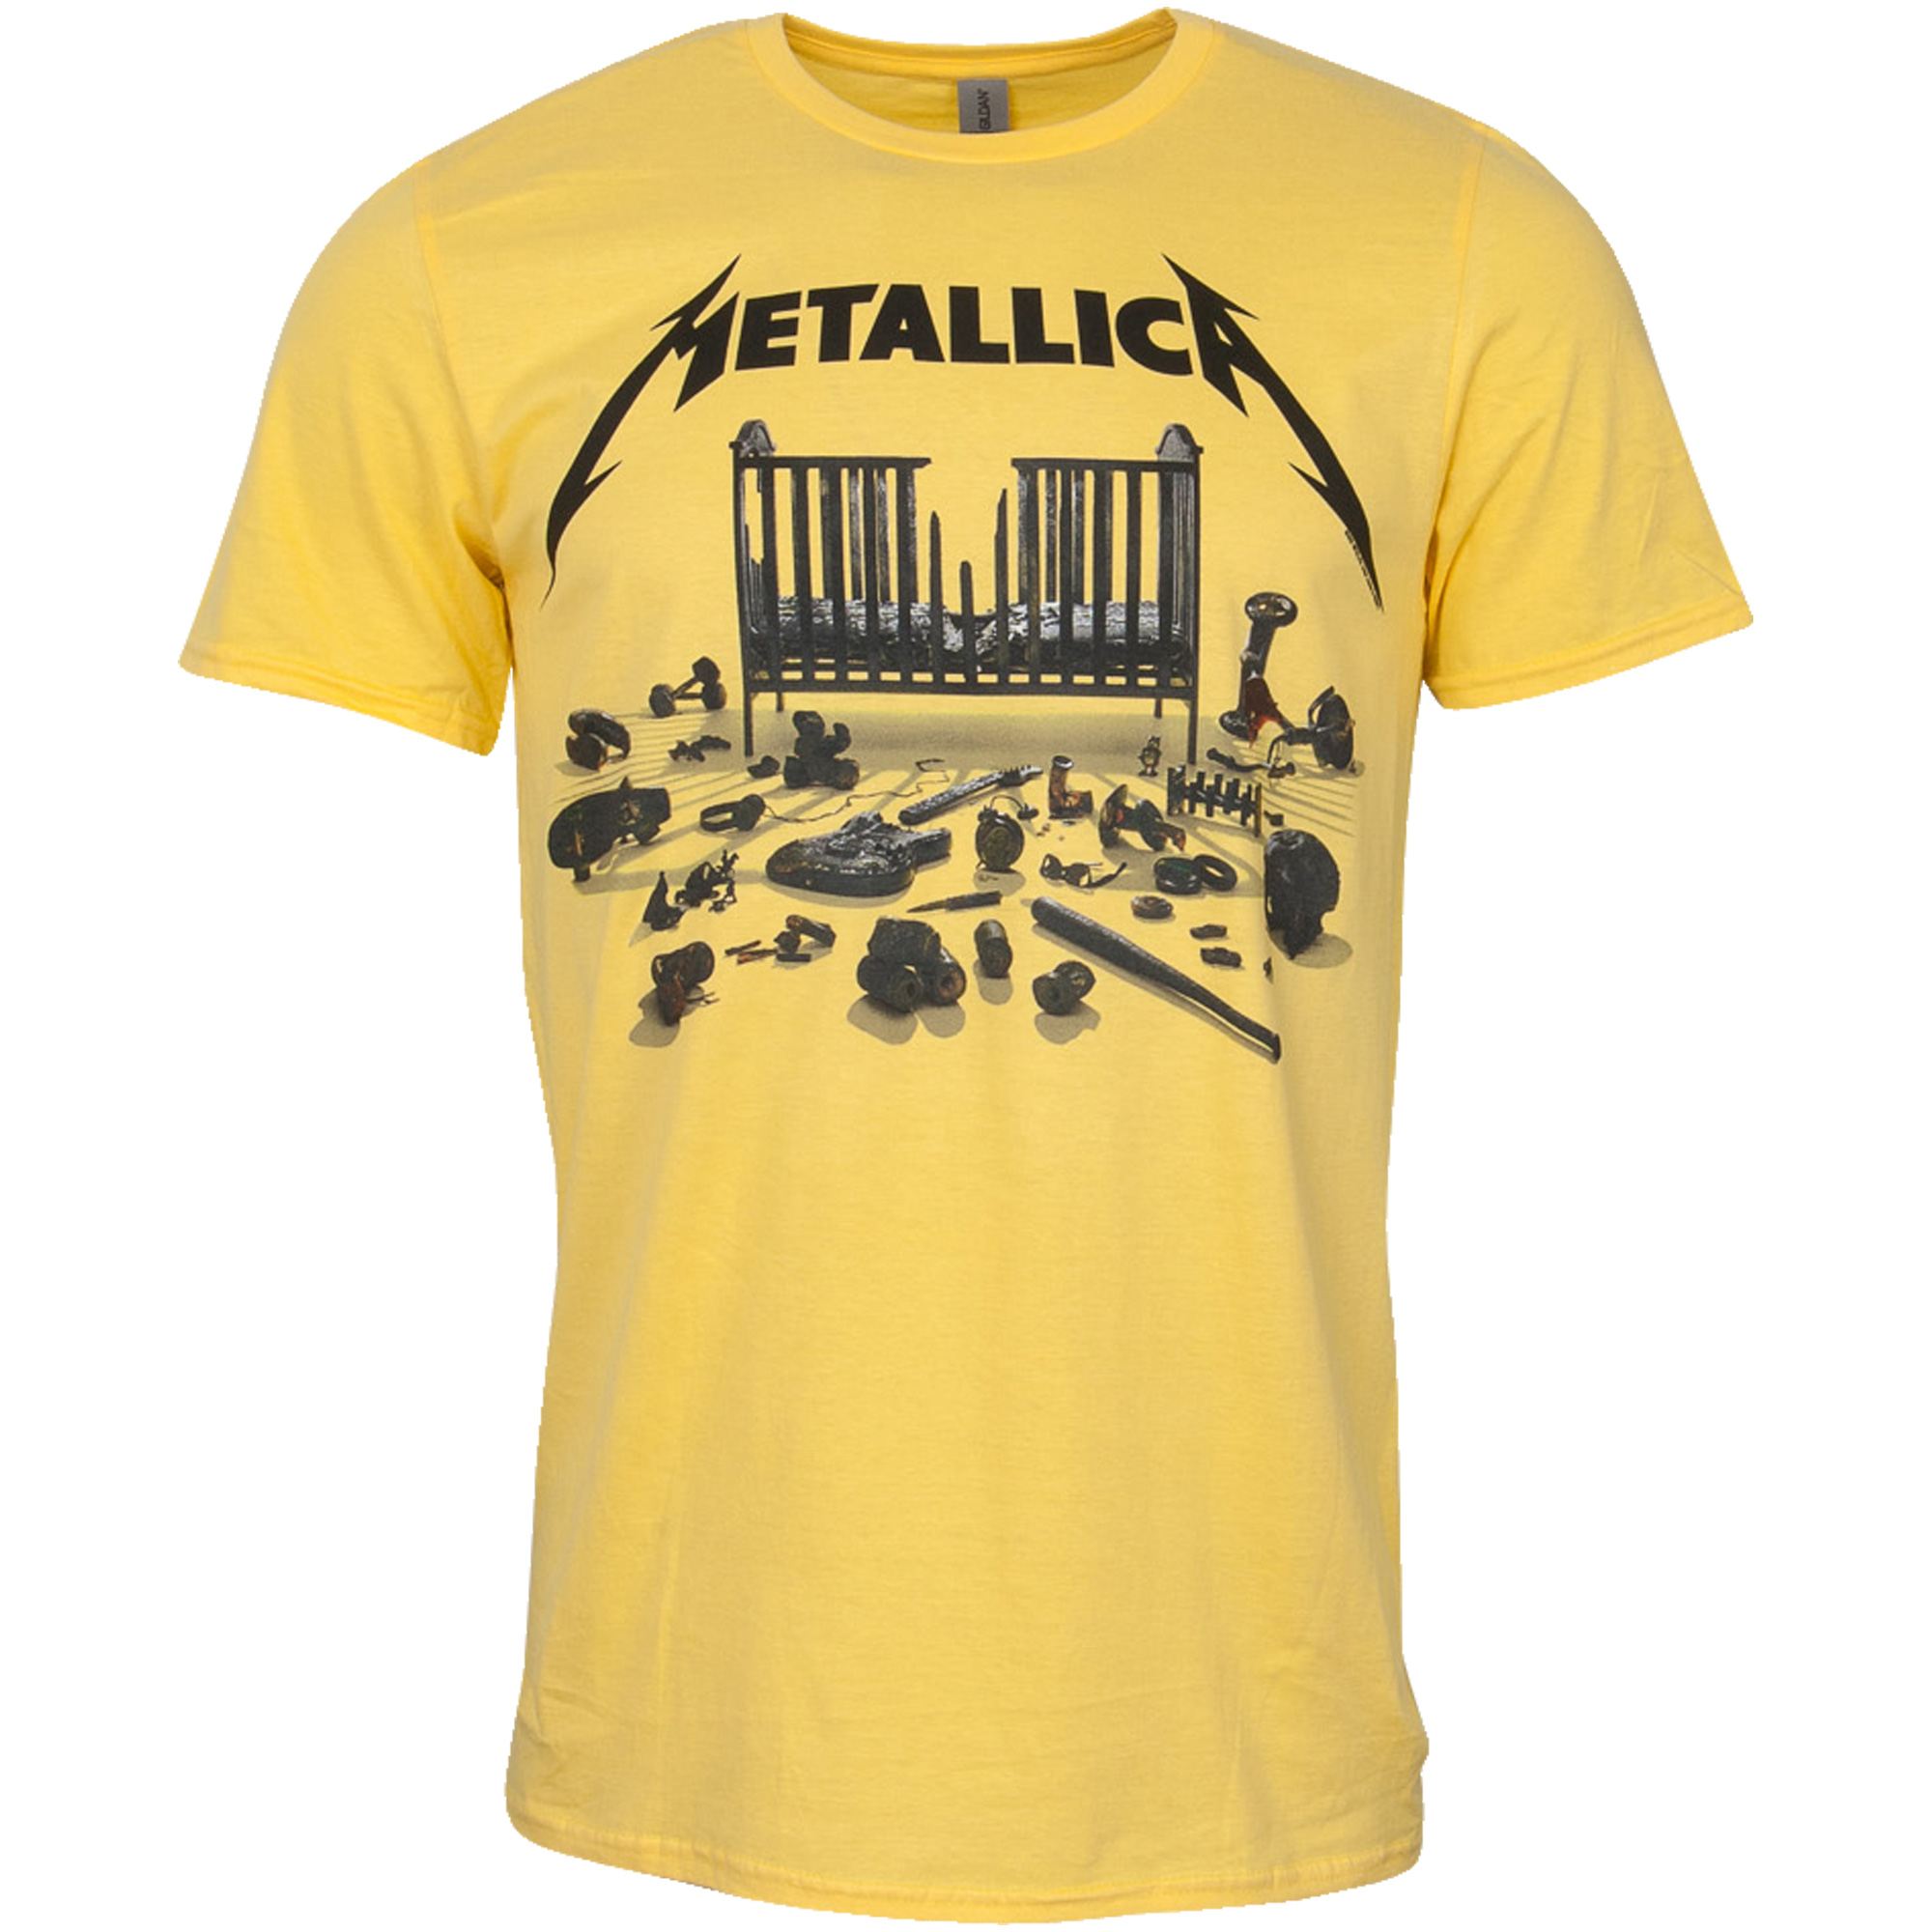 Metallica - T-Shirt 72 Seasons Simplified Cover - gelb